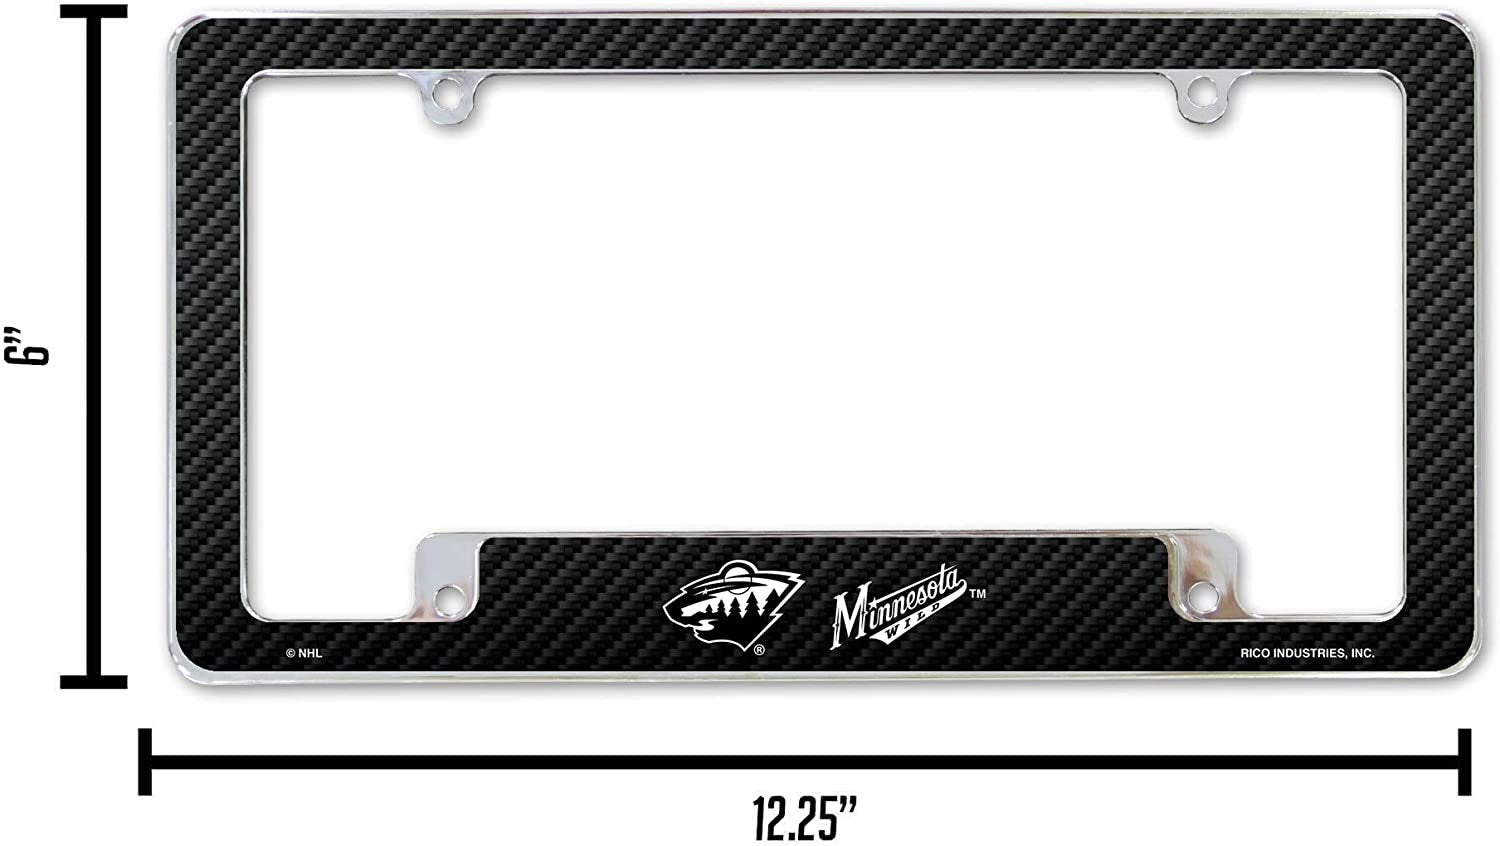 Minnesota Wild Metal License Plate Frame Chrome Tag Cover Carbon Fiber Design 6x12 Inch